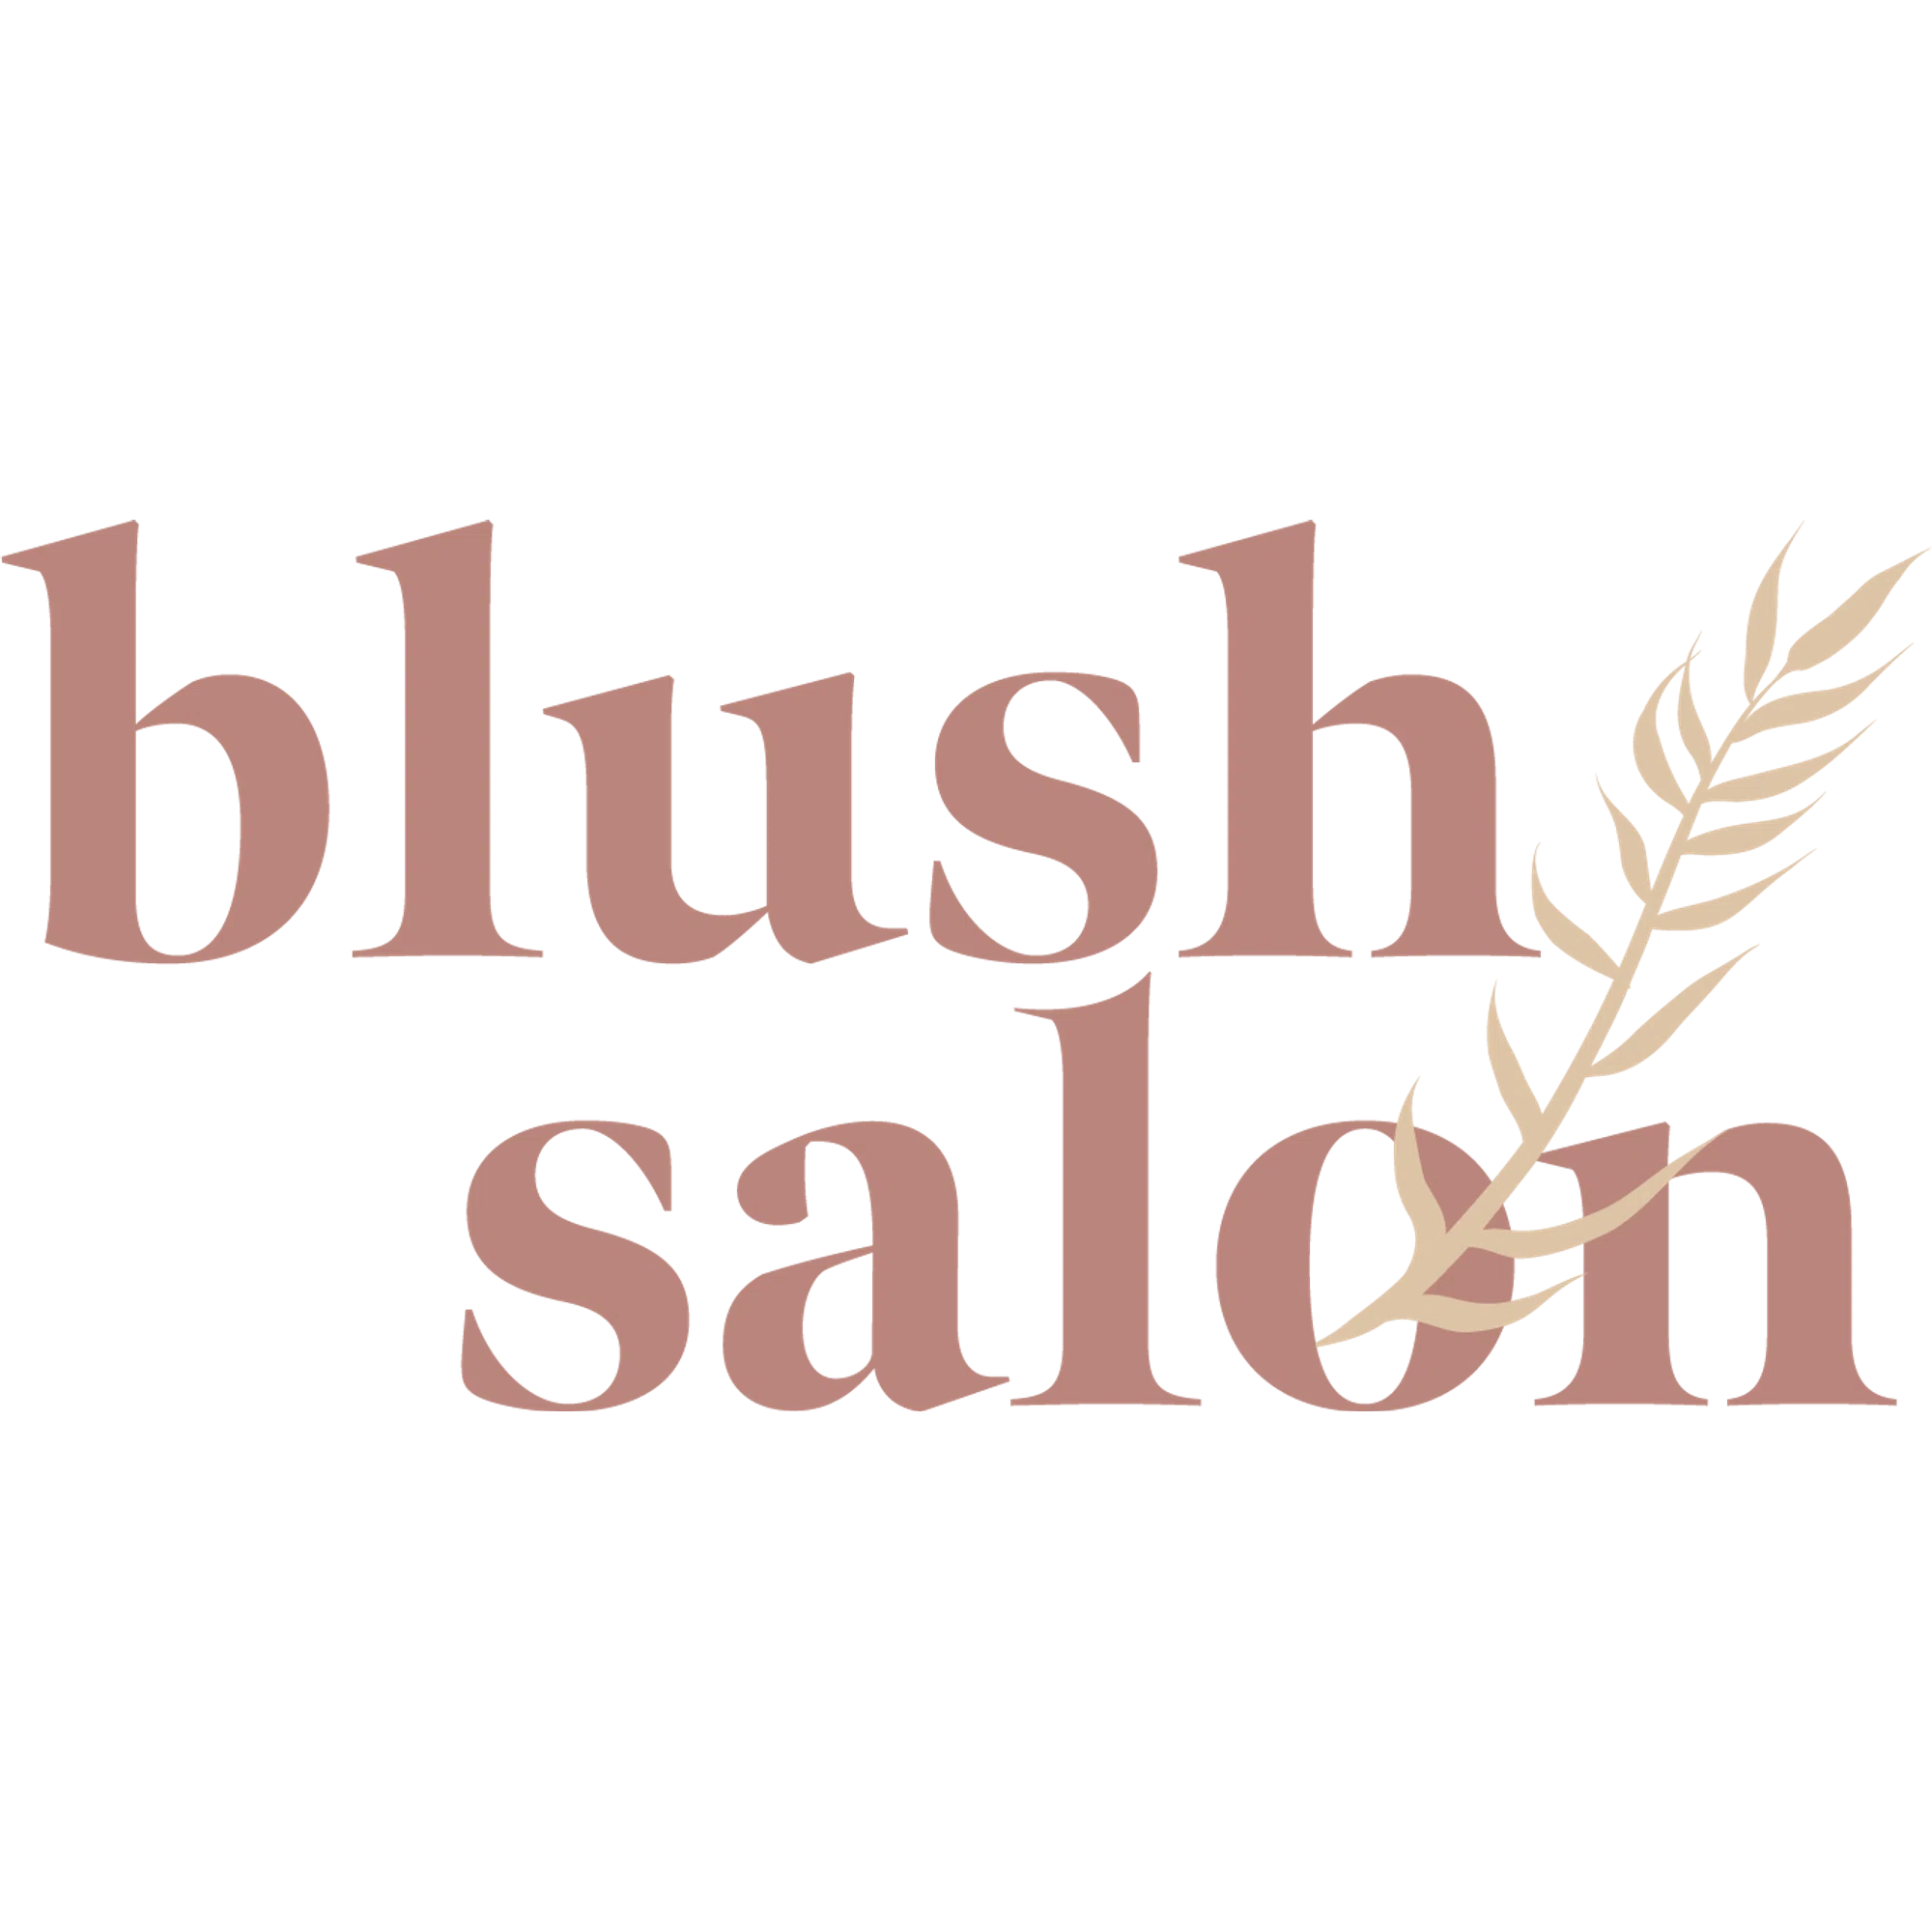 Blush Salon AZ